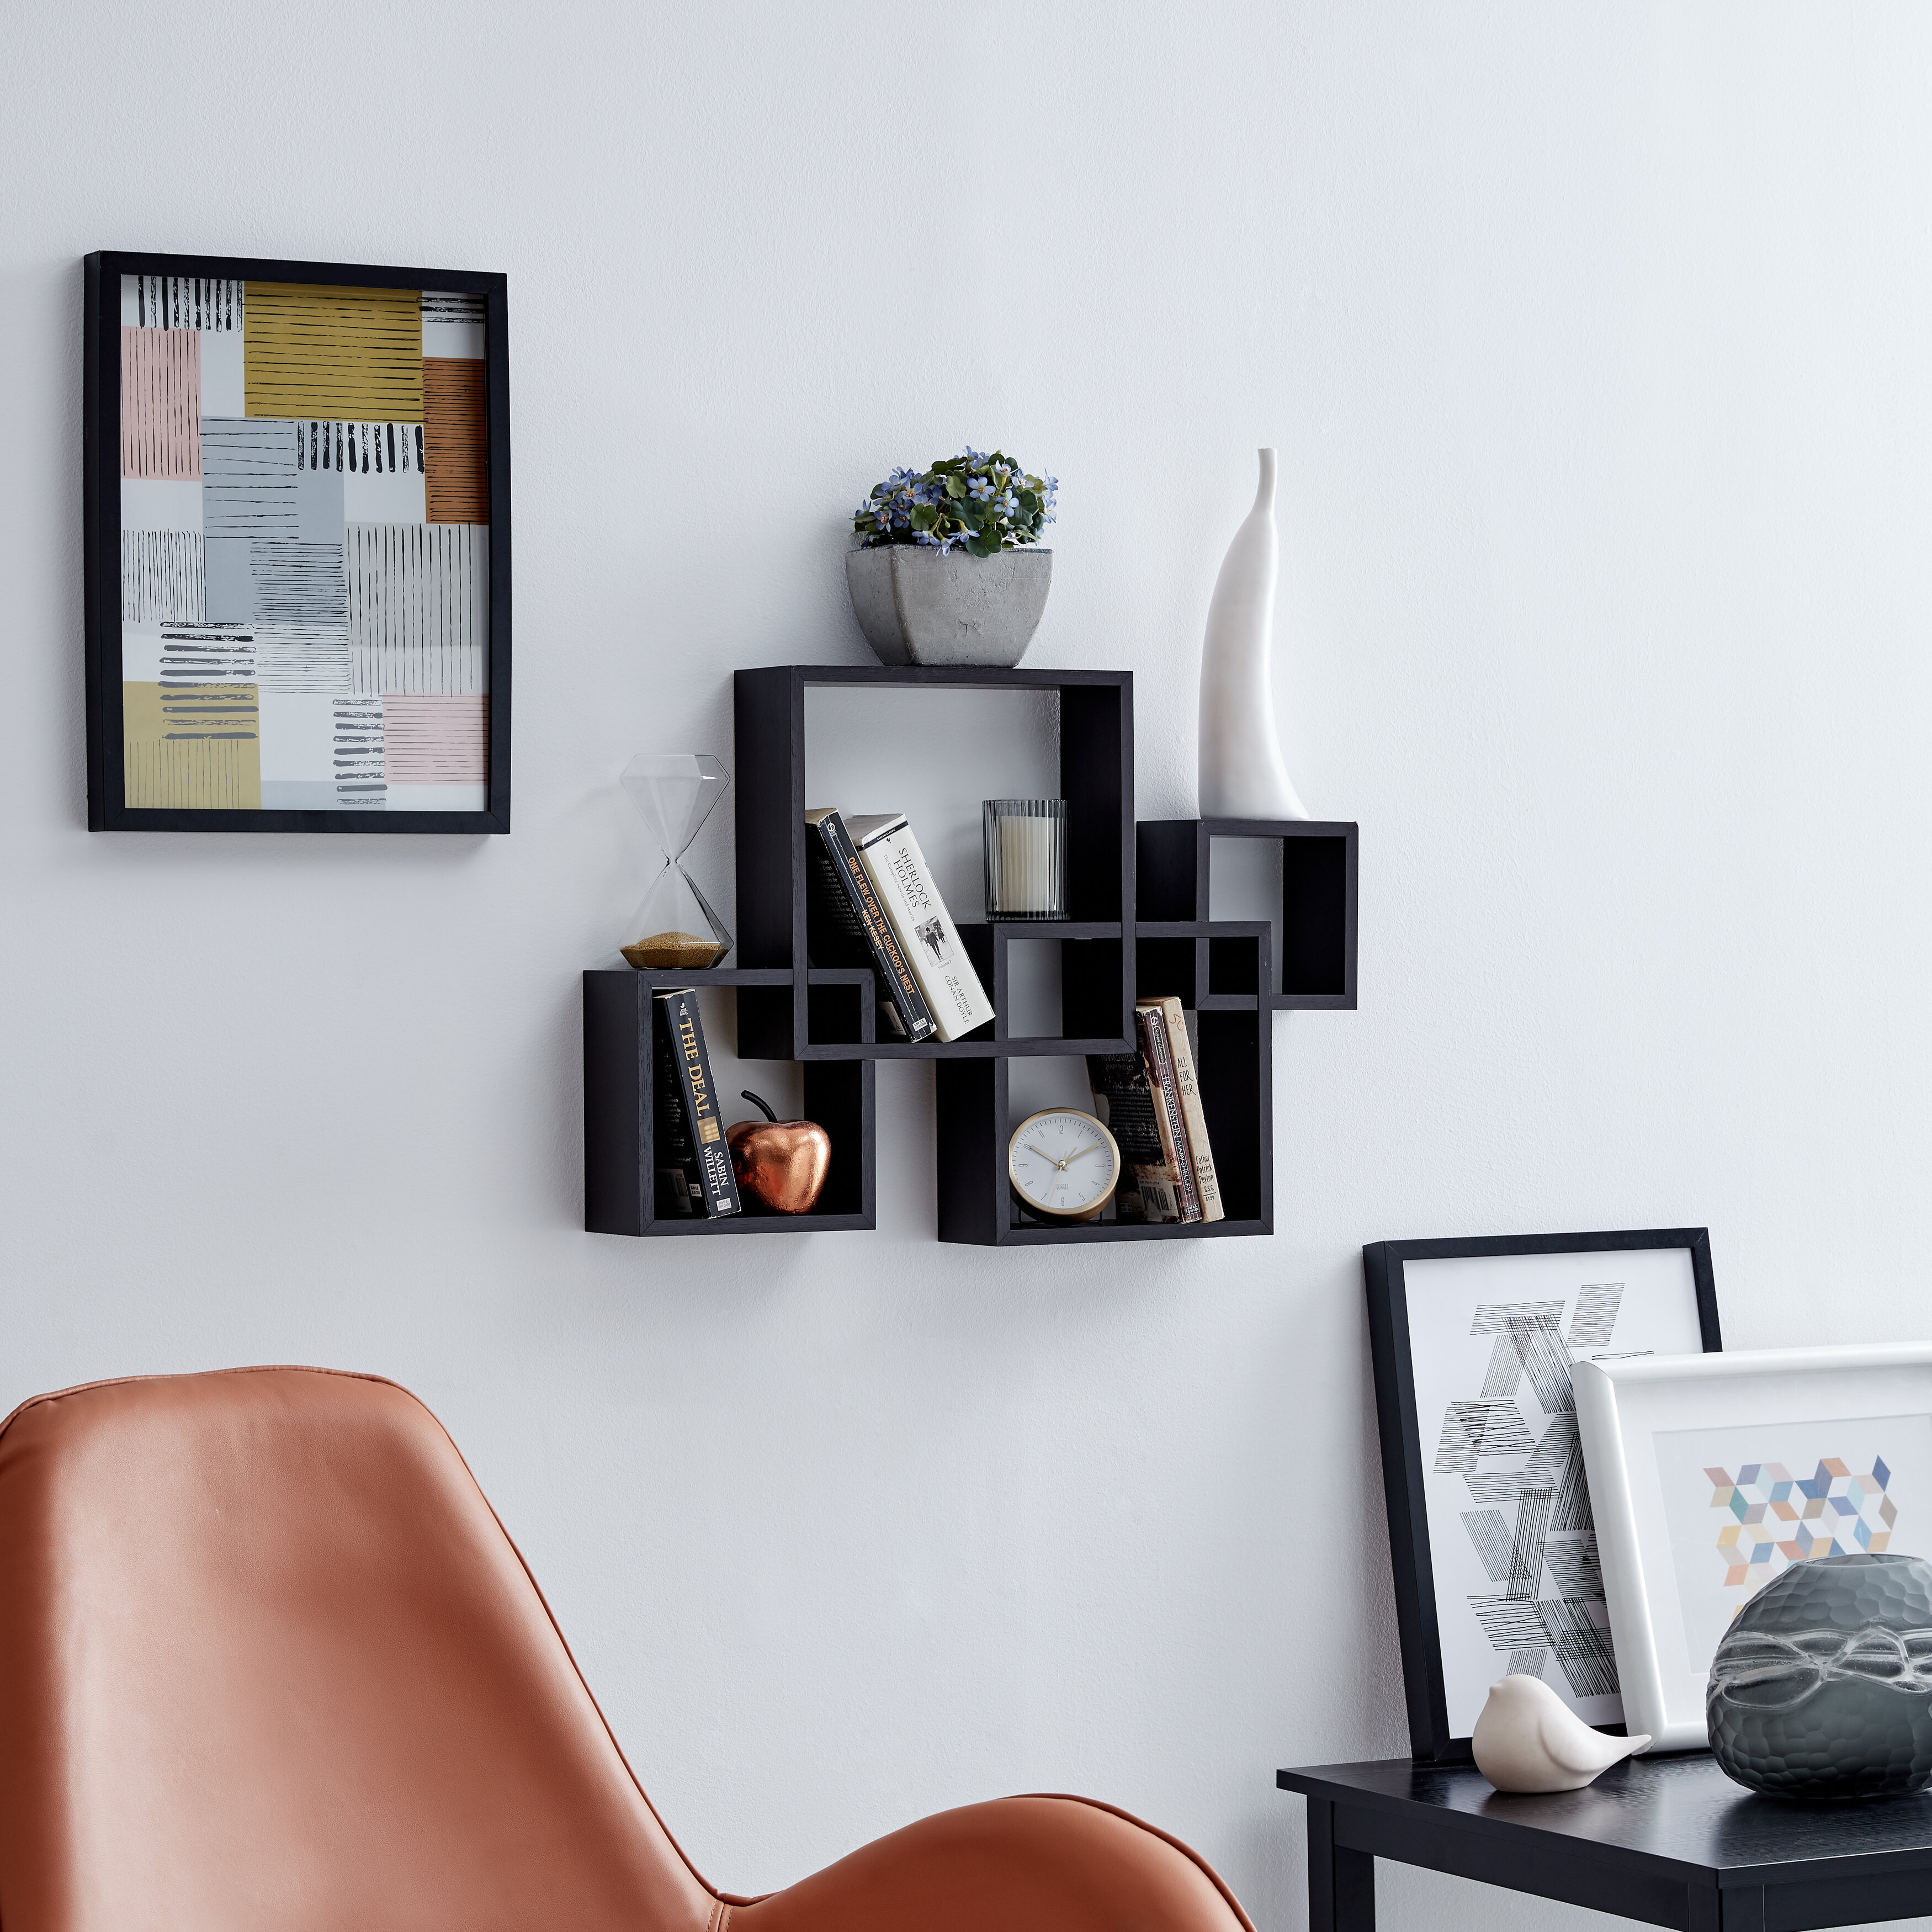 Wayfair   Bedroom Wall & Display Shelves You'll Love in 20